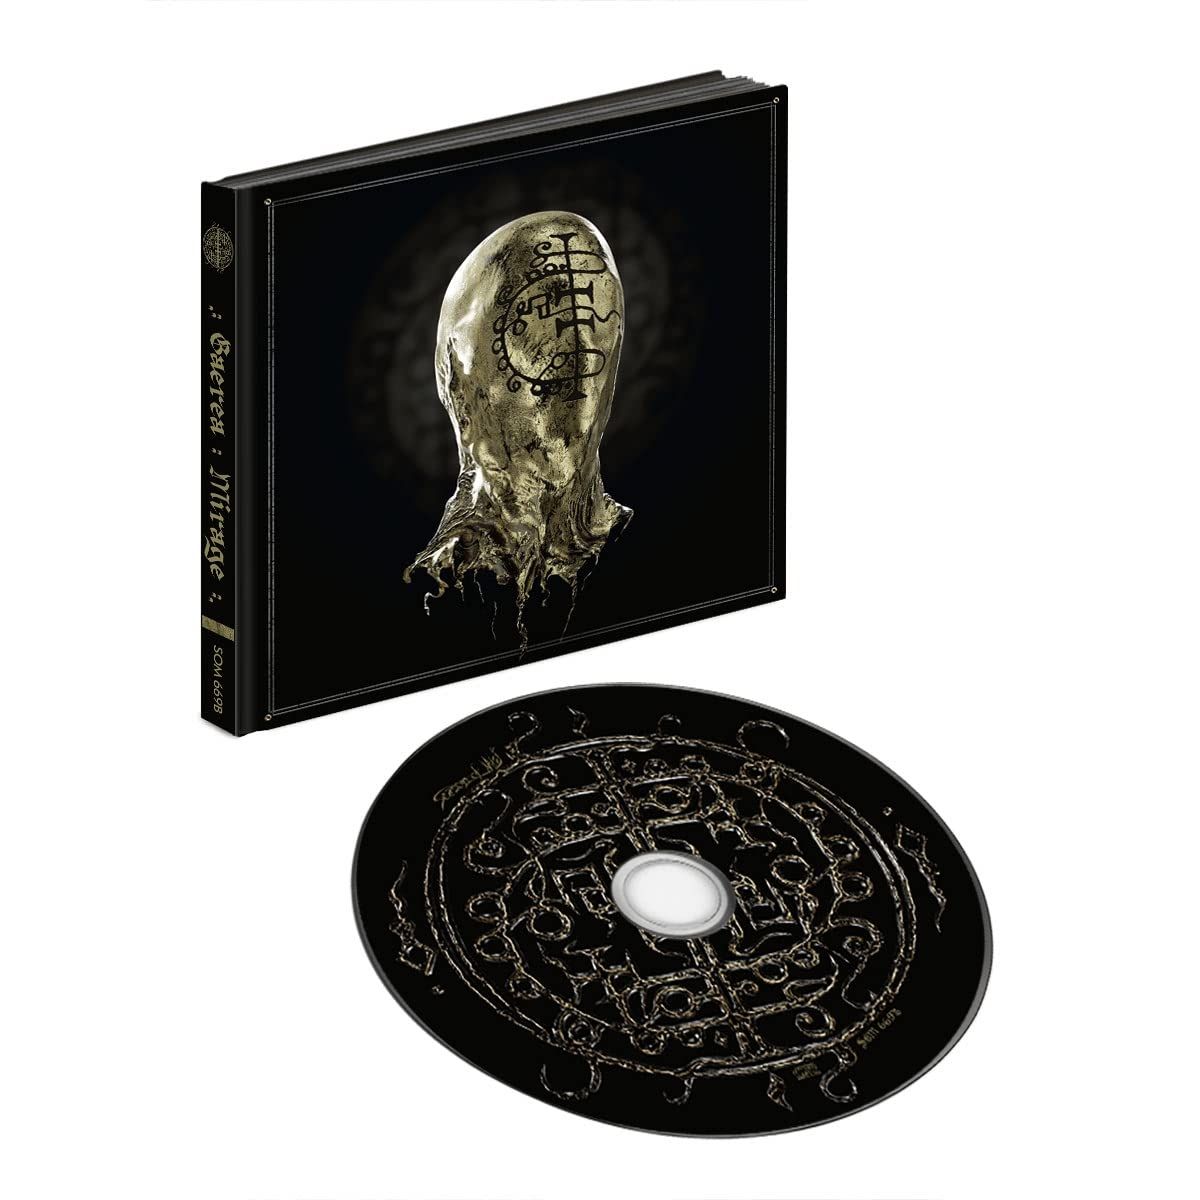 Gaerea - Mirage (Deluxe Ed. mediabook with bonus track) - CD - New